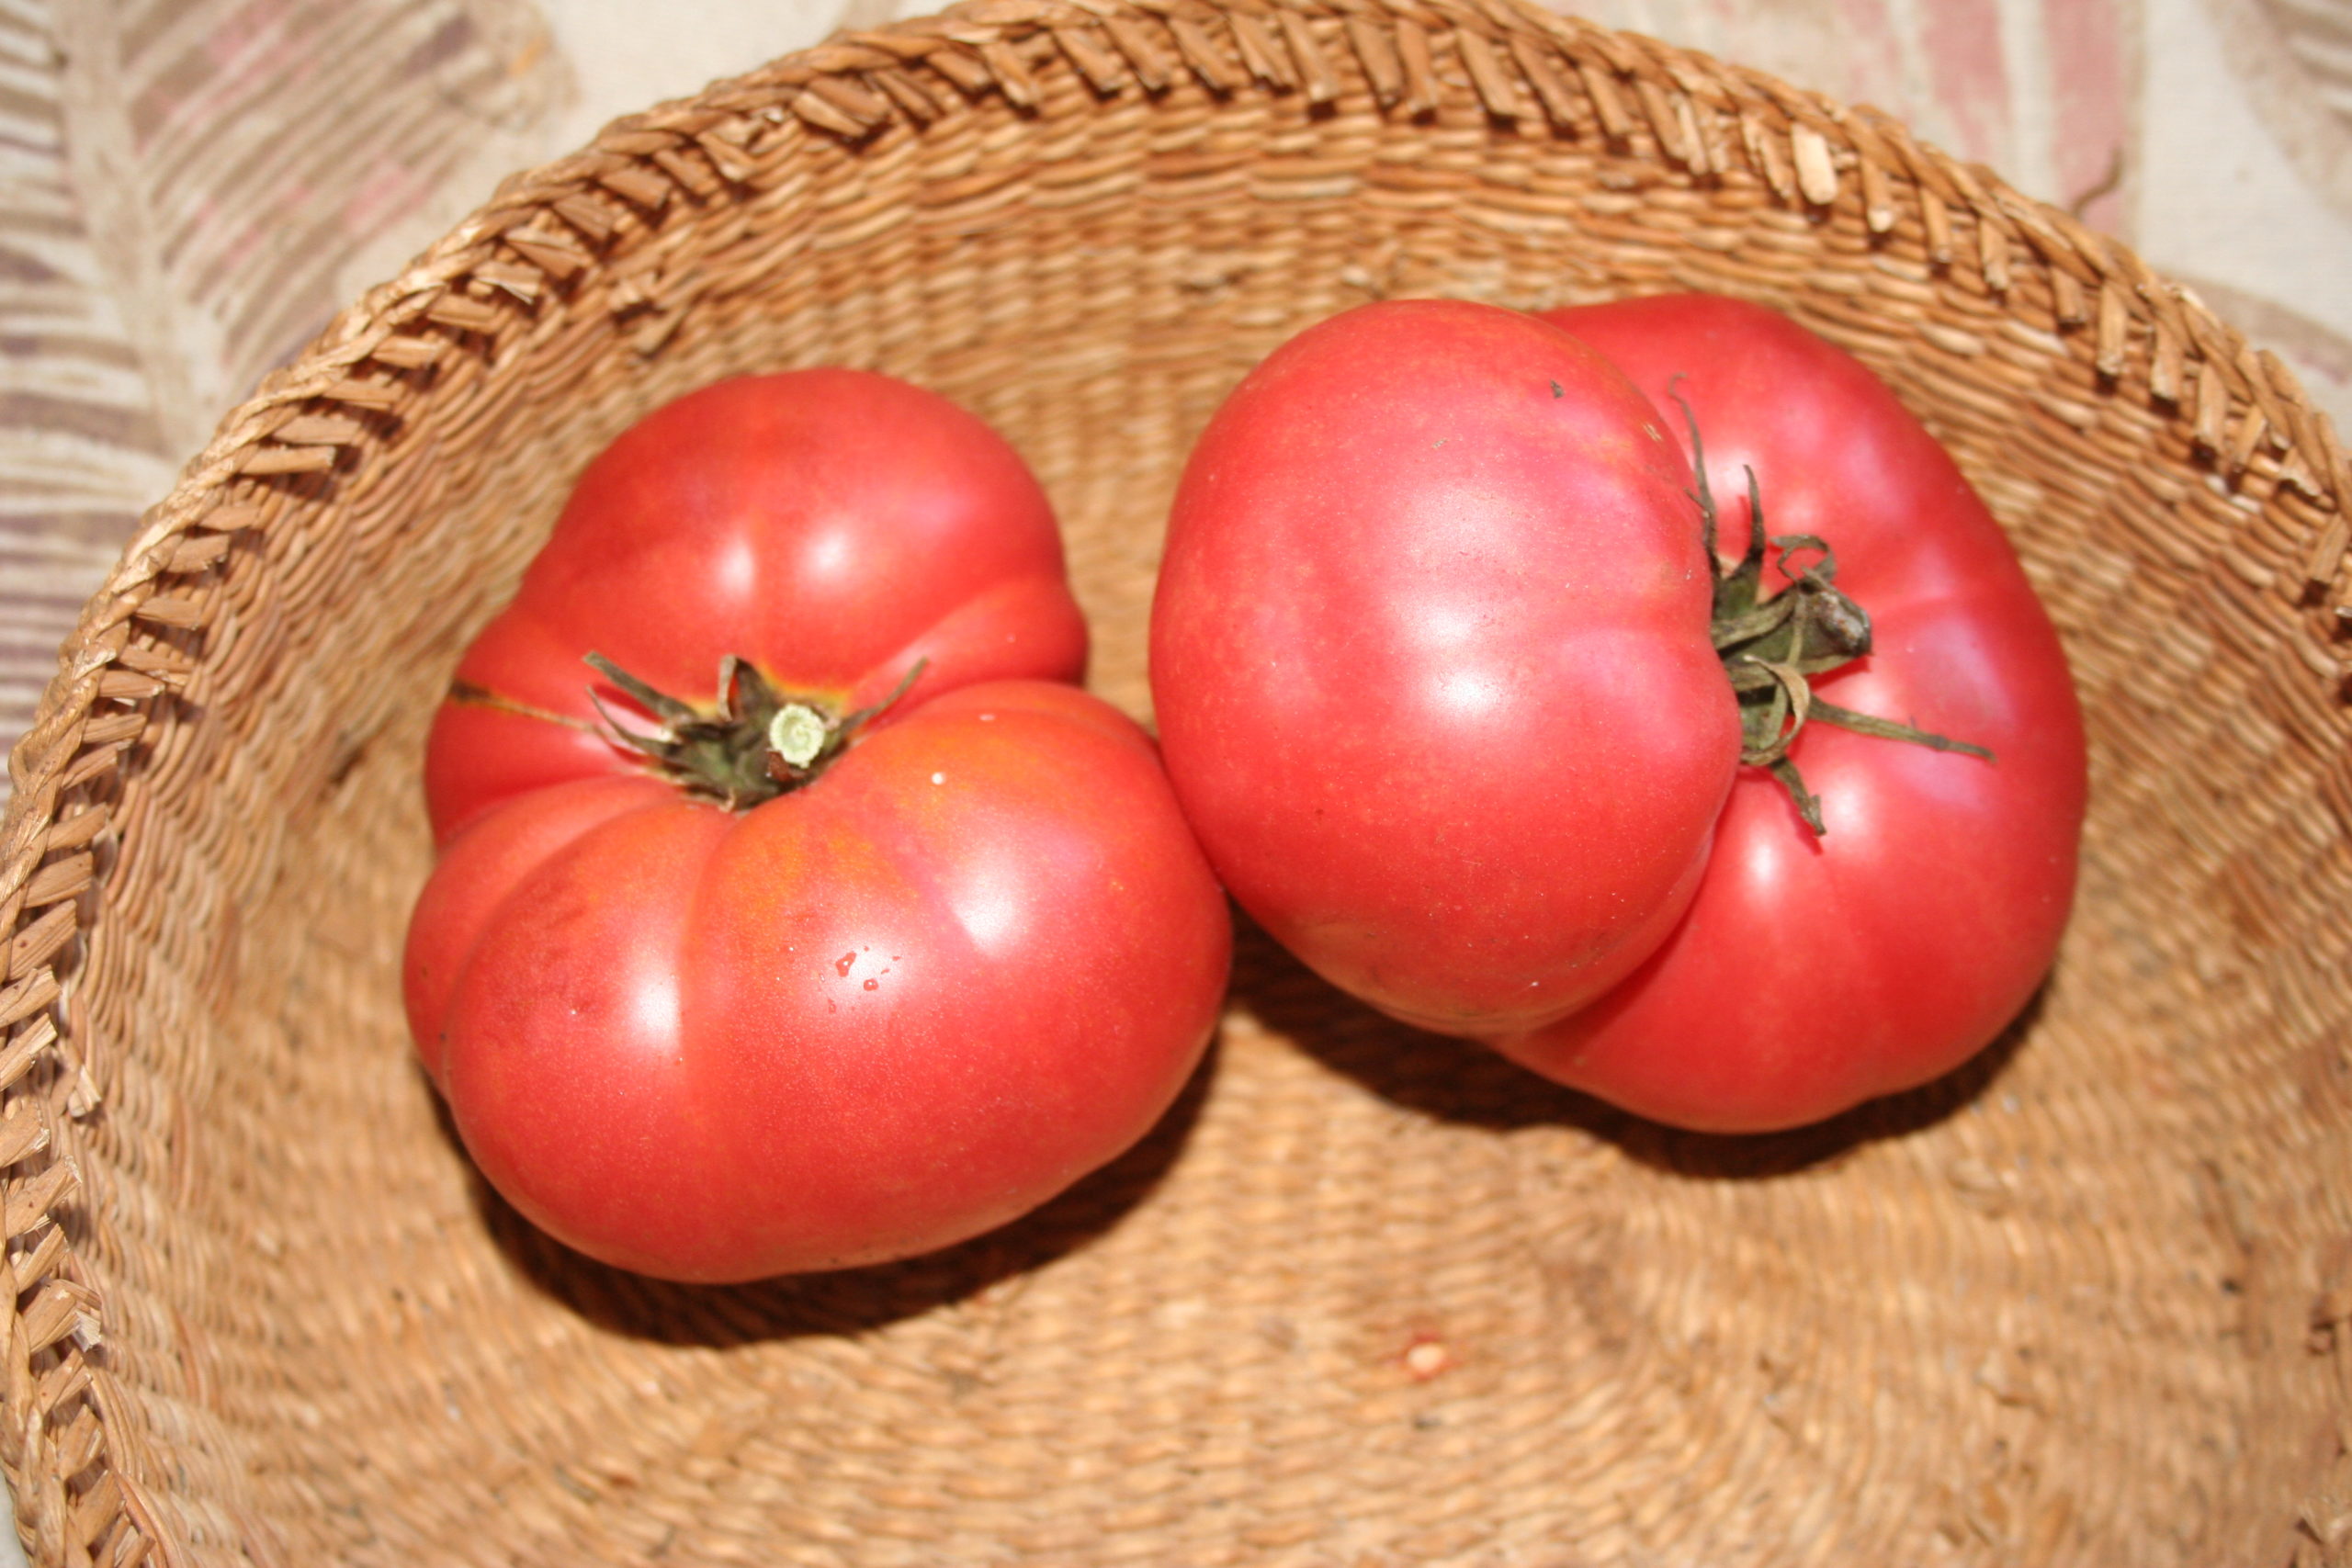 Beefsteak tomatoes are kings of summer flavor